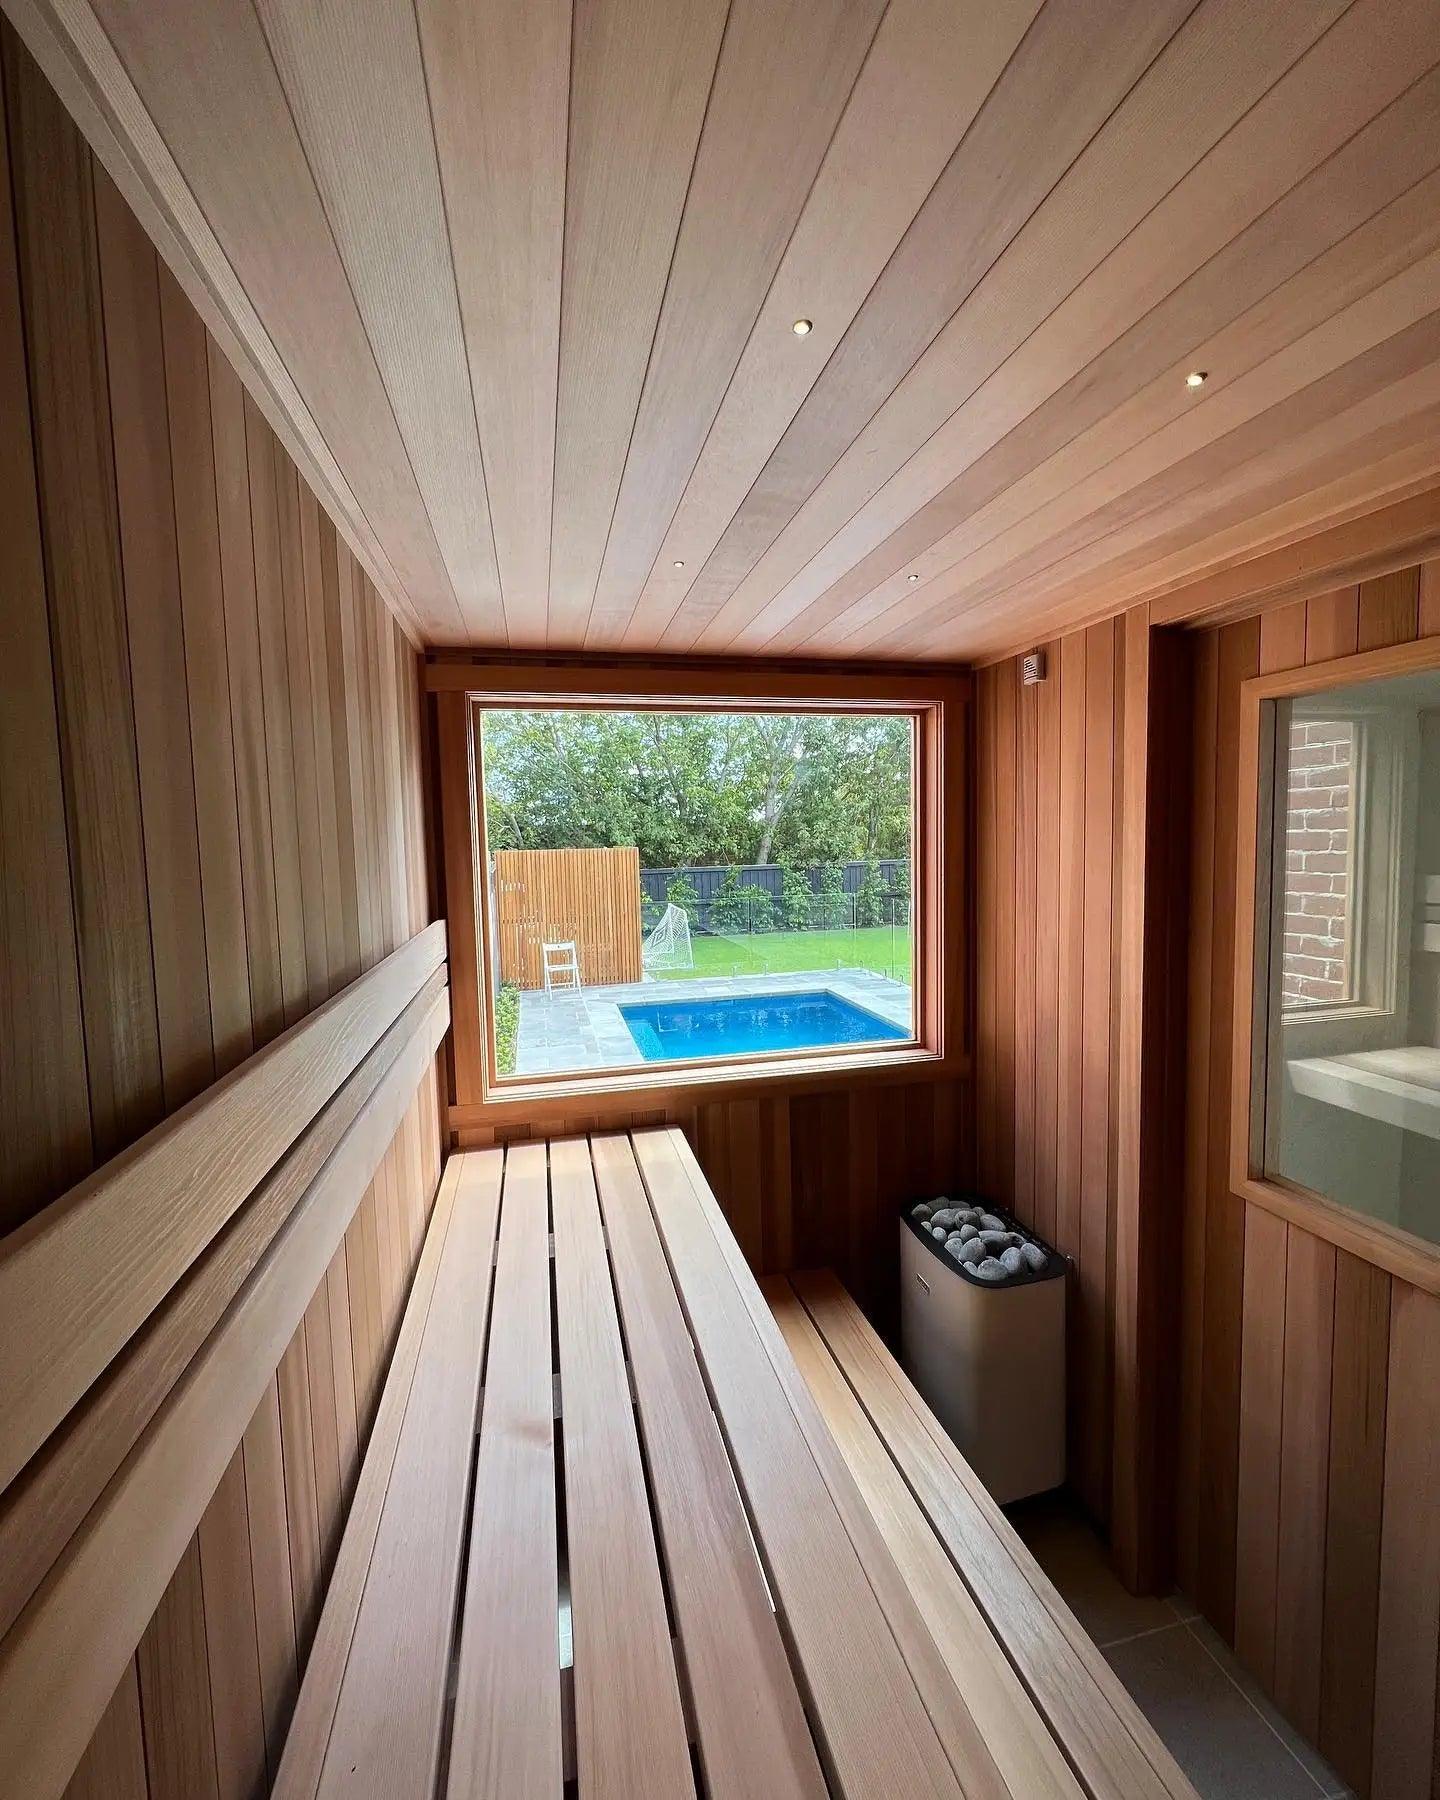 Luxurious Home Sauna and Beauty Salon Oasis - Organic Materials, 24-Month Warranty  ourlum.com   